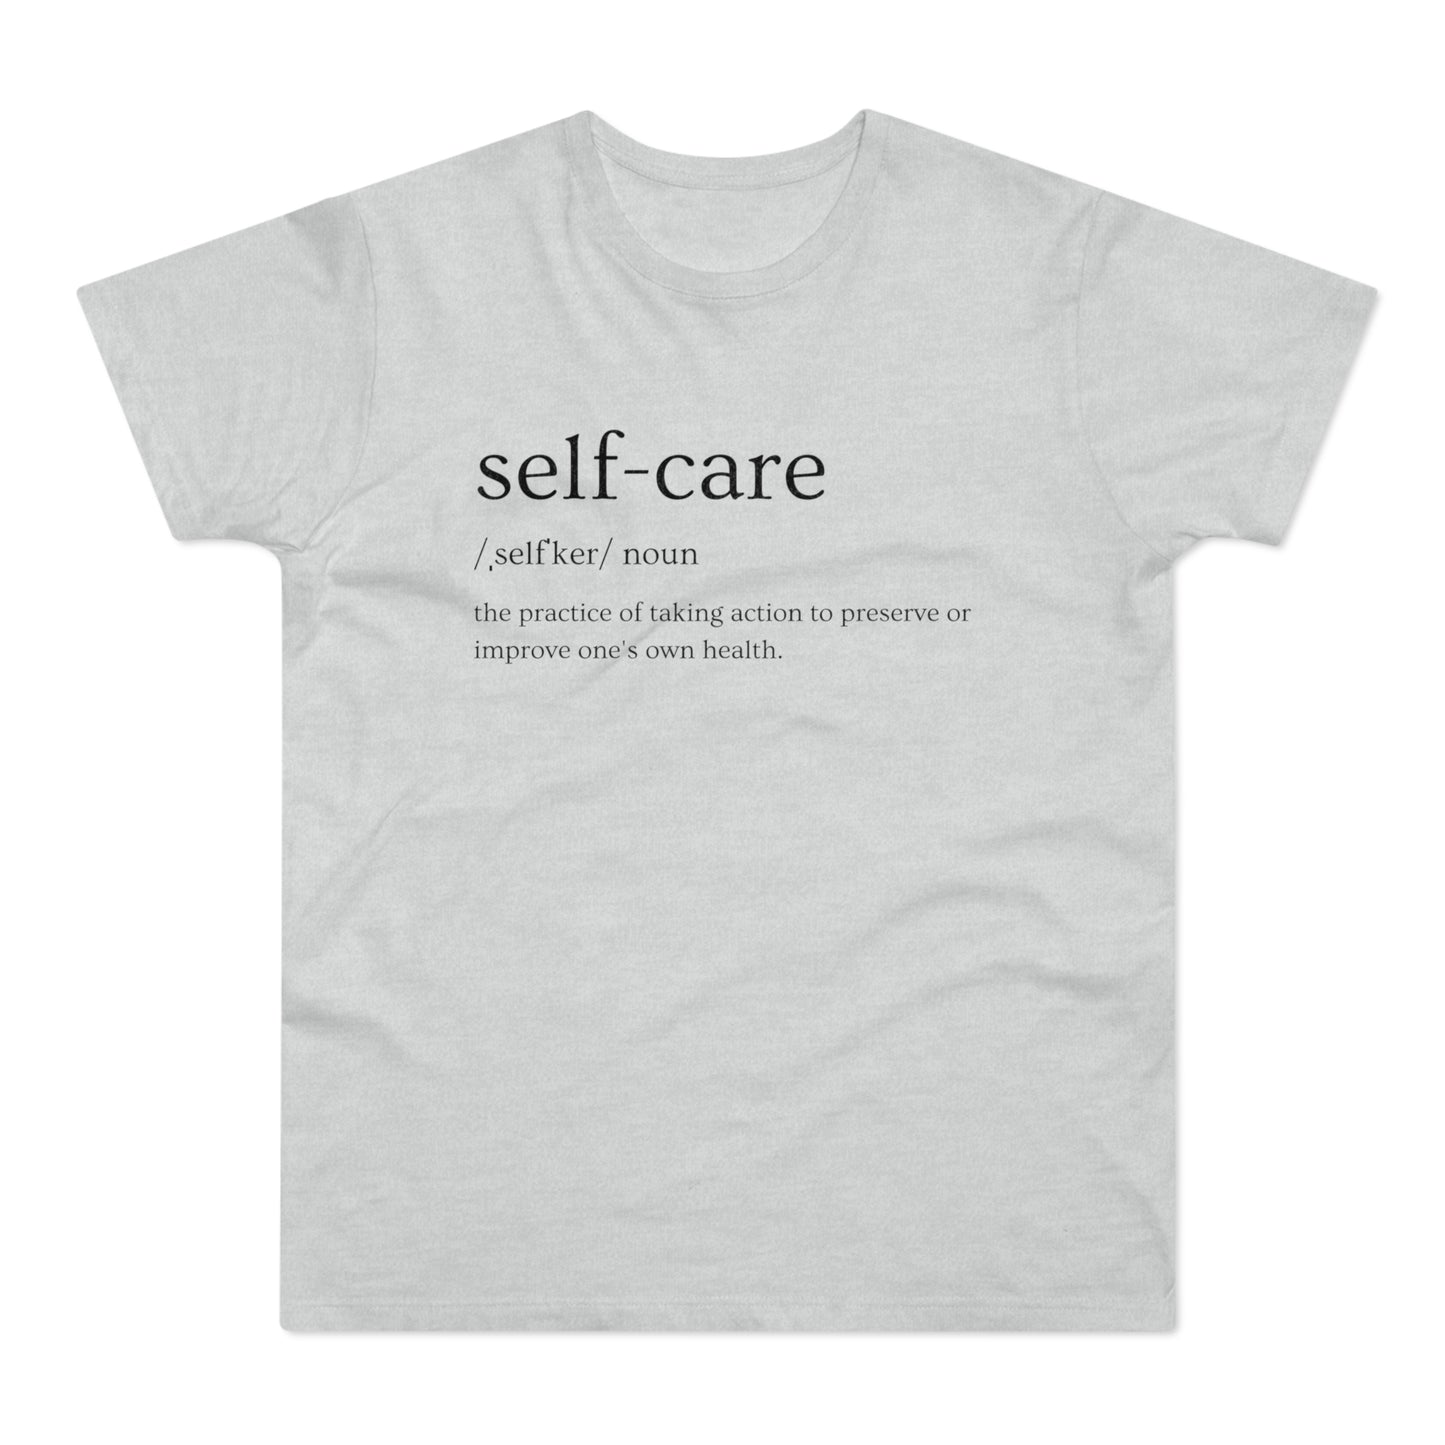 Self-care t-shirt